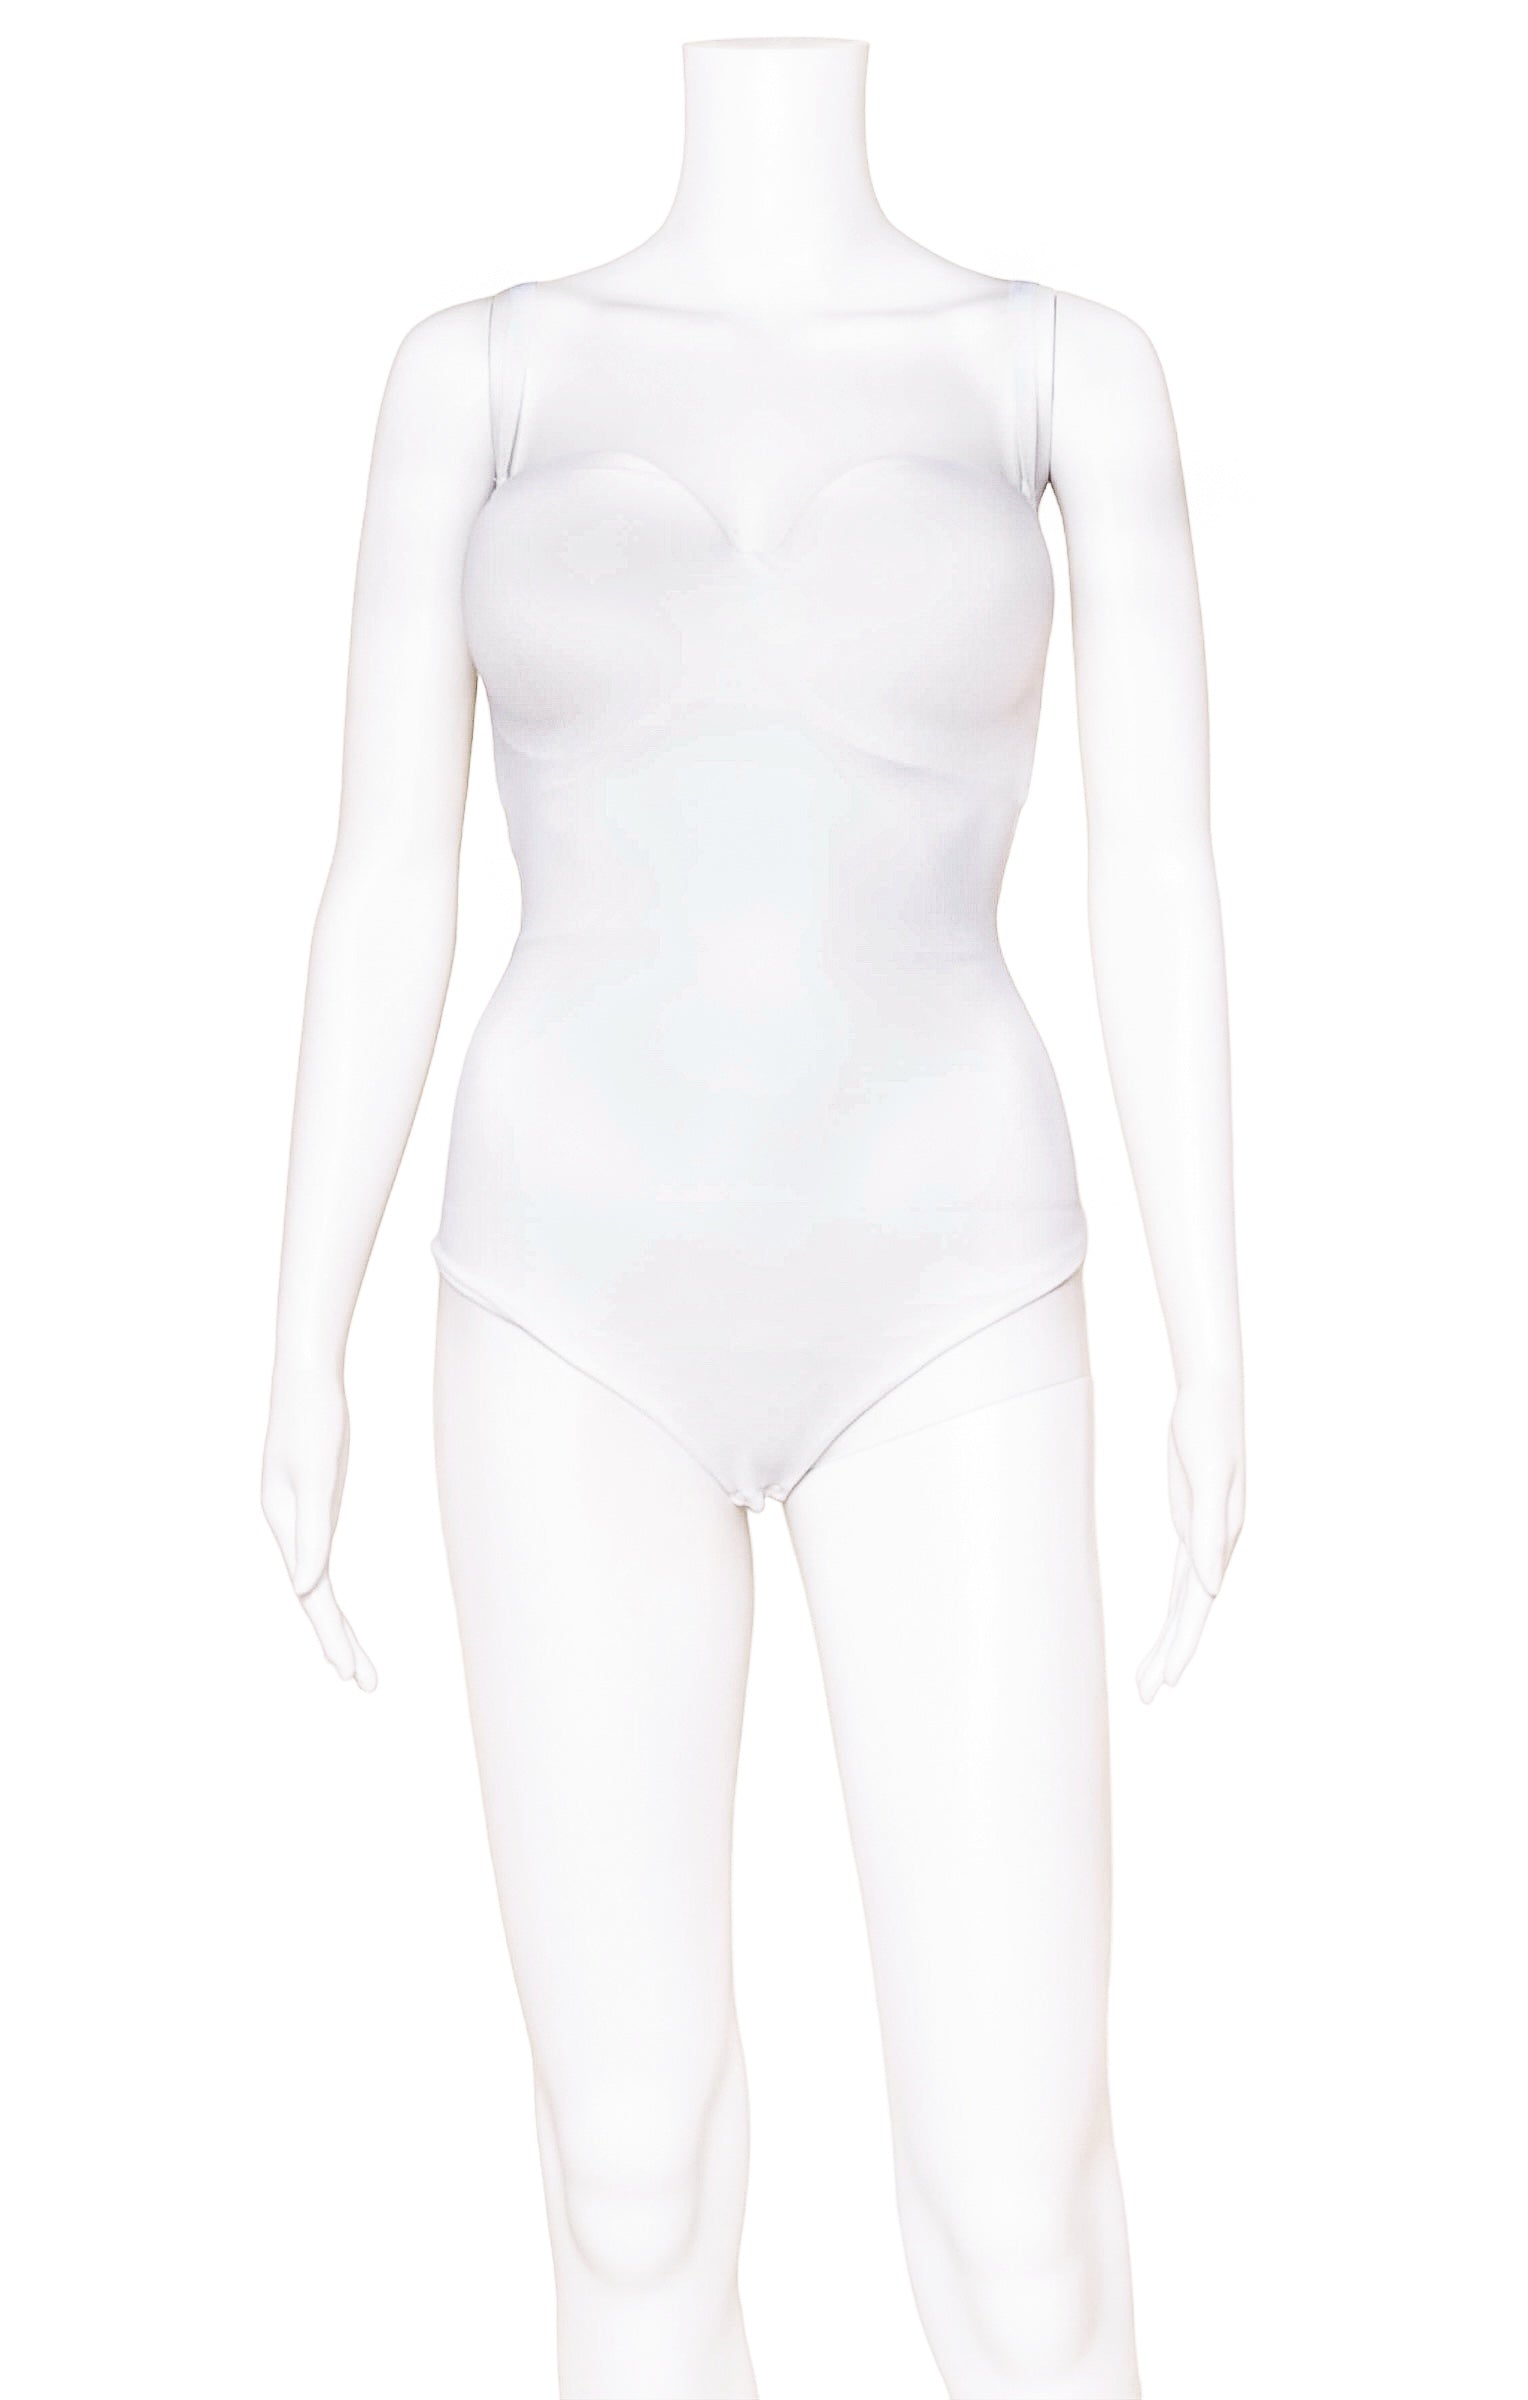 WOLFORD Bodysuit / Shapewear Size: M / D Cup